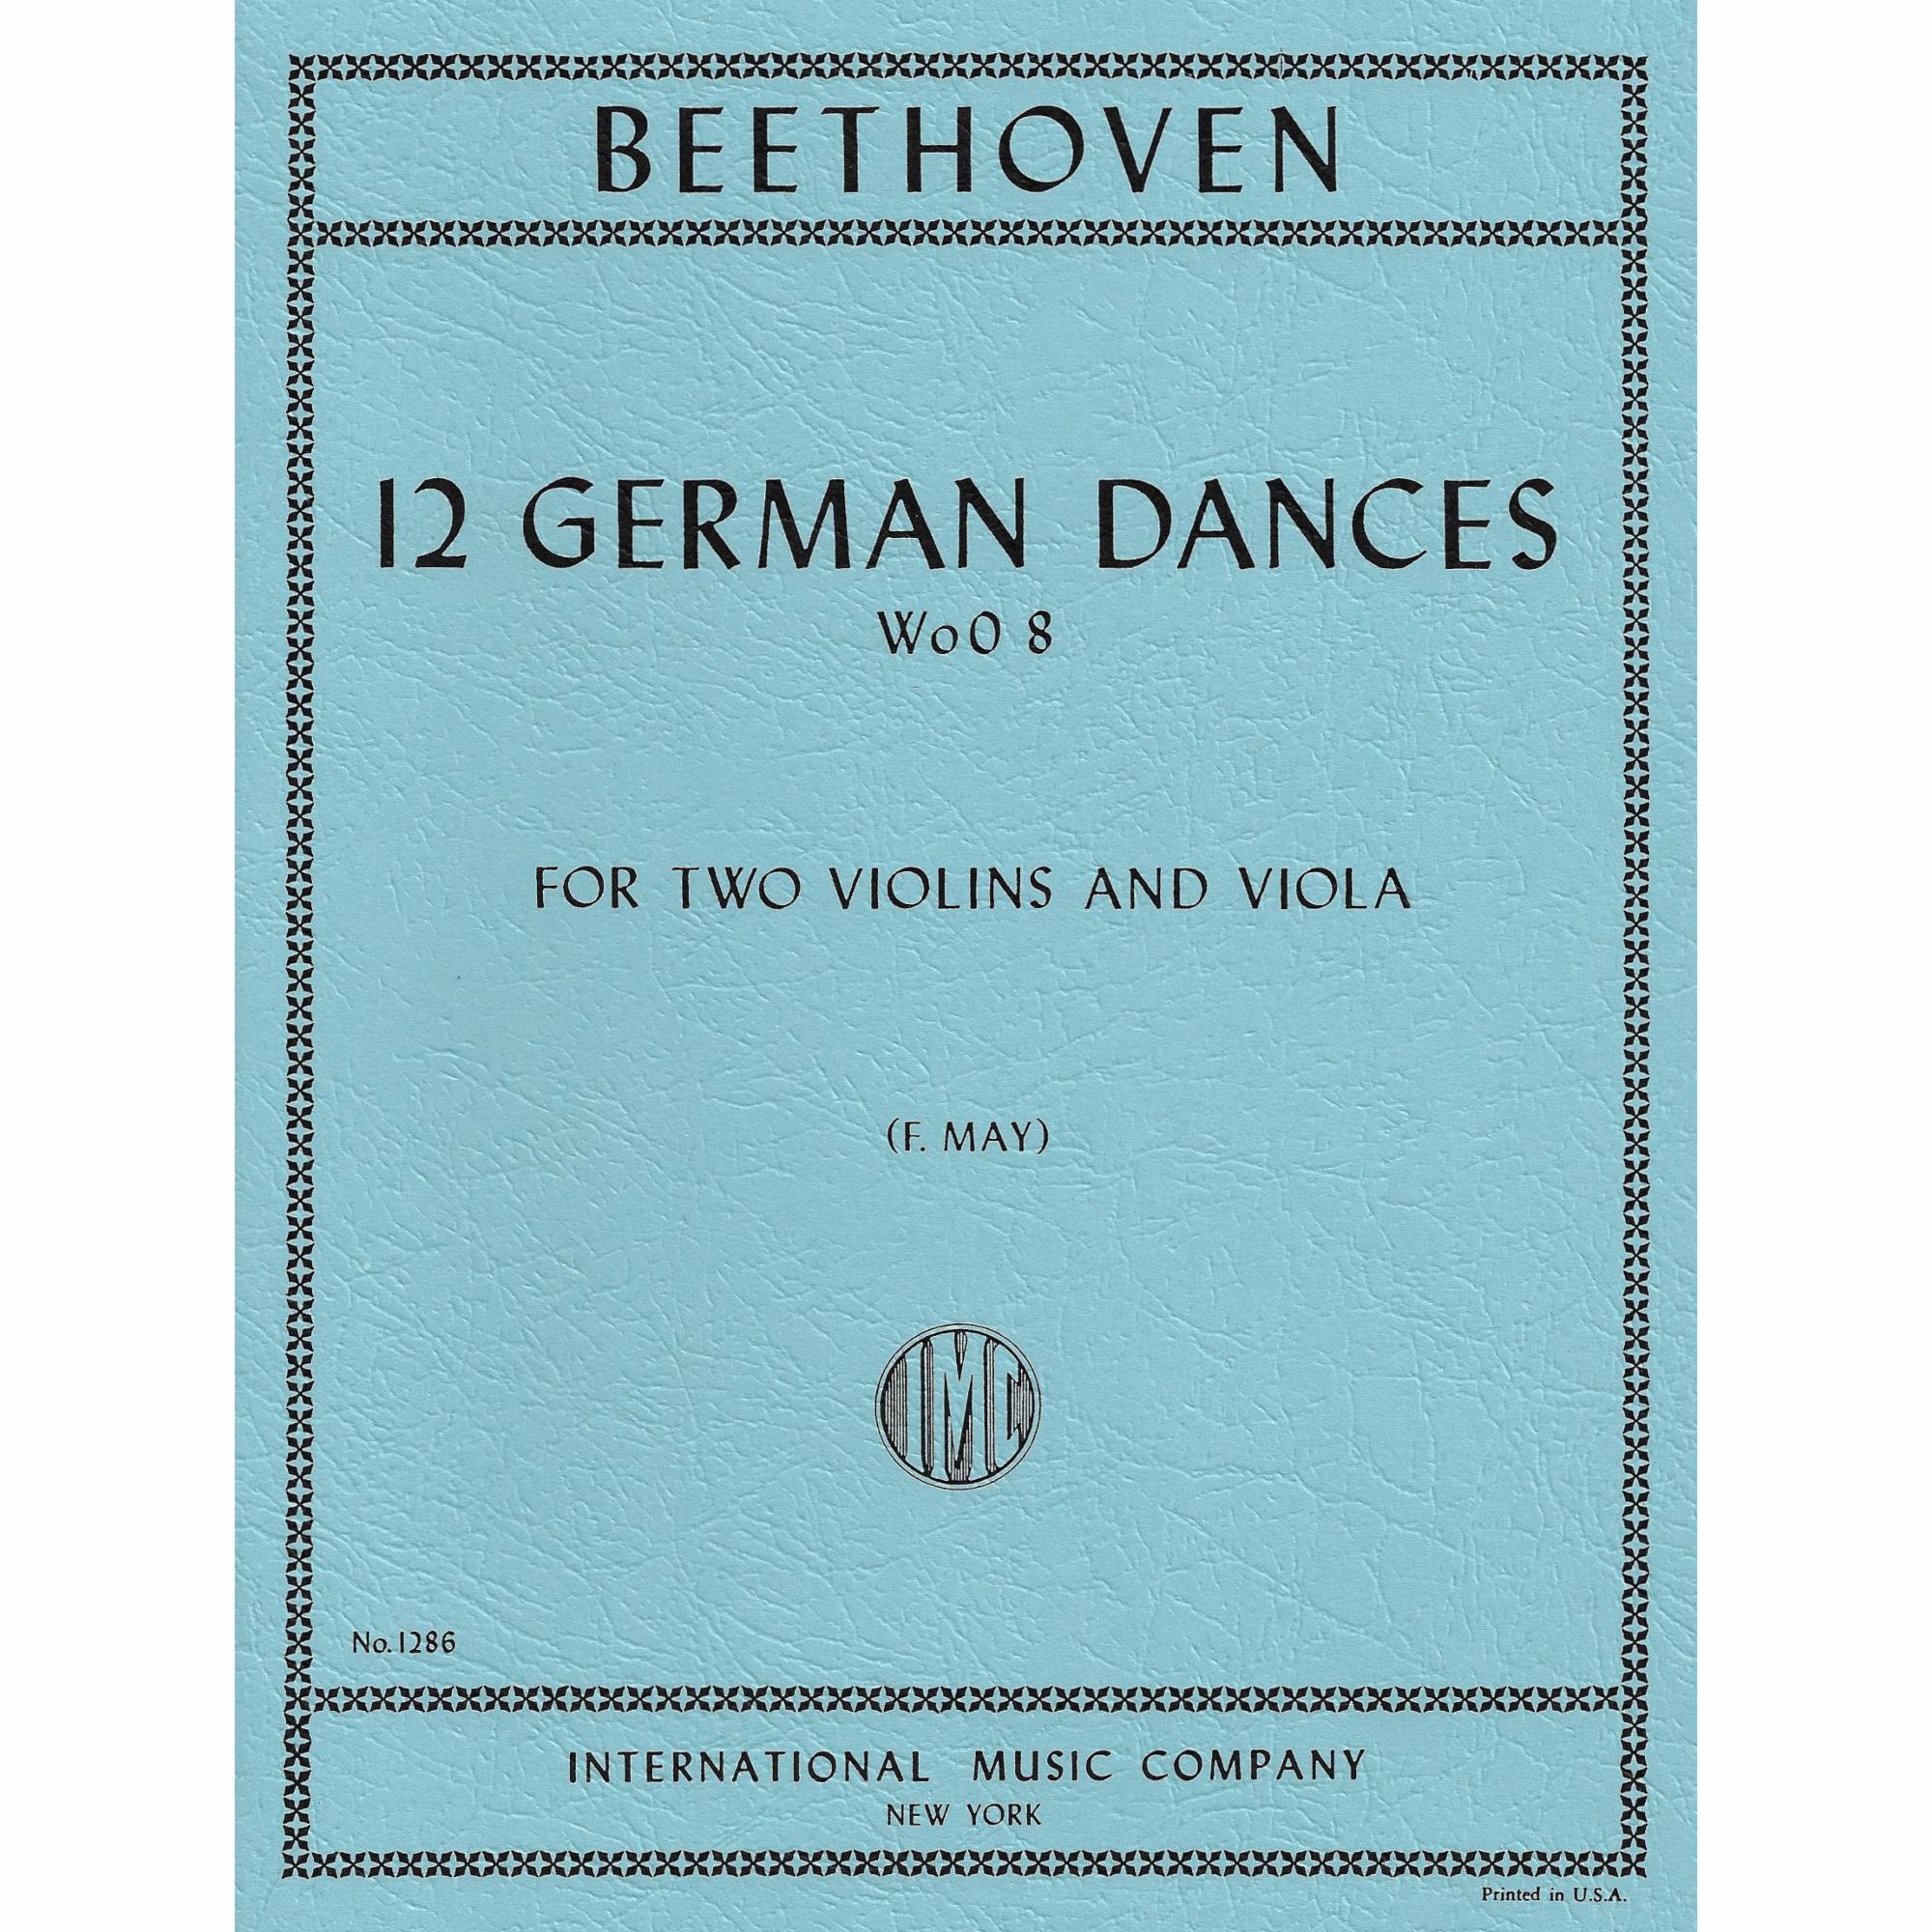 Beethoven -- 12 German Dances, WoO 8 for Two Violins and Viola